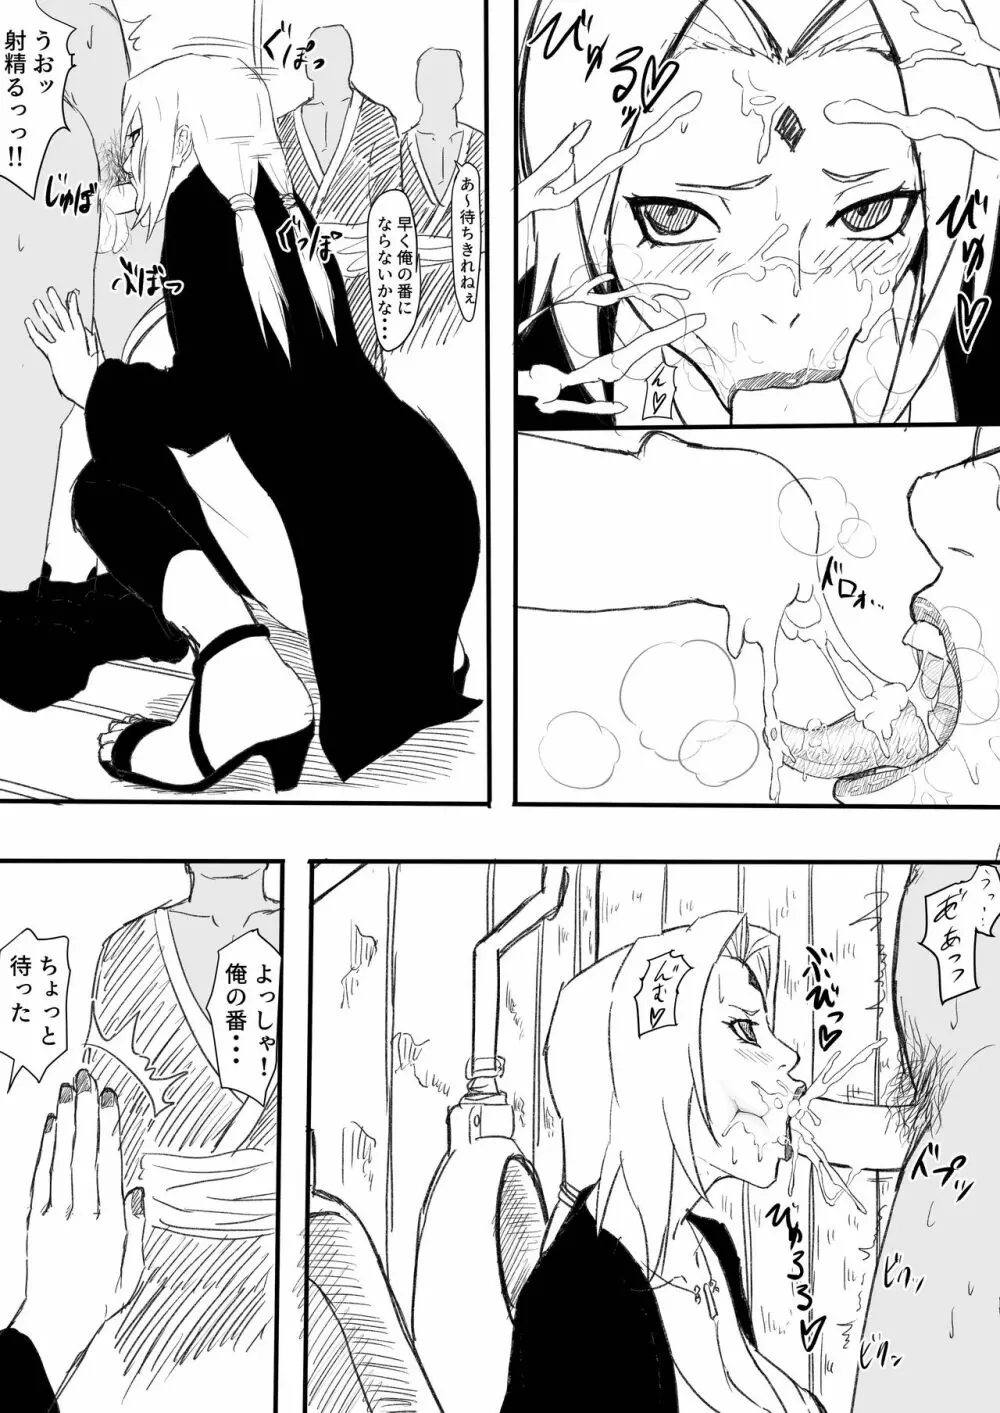 [Iwao] Te Ero Manga (Naruto) Updated Page.6